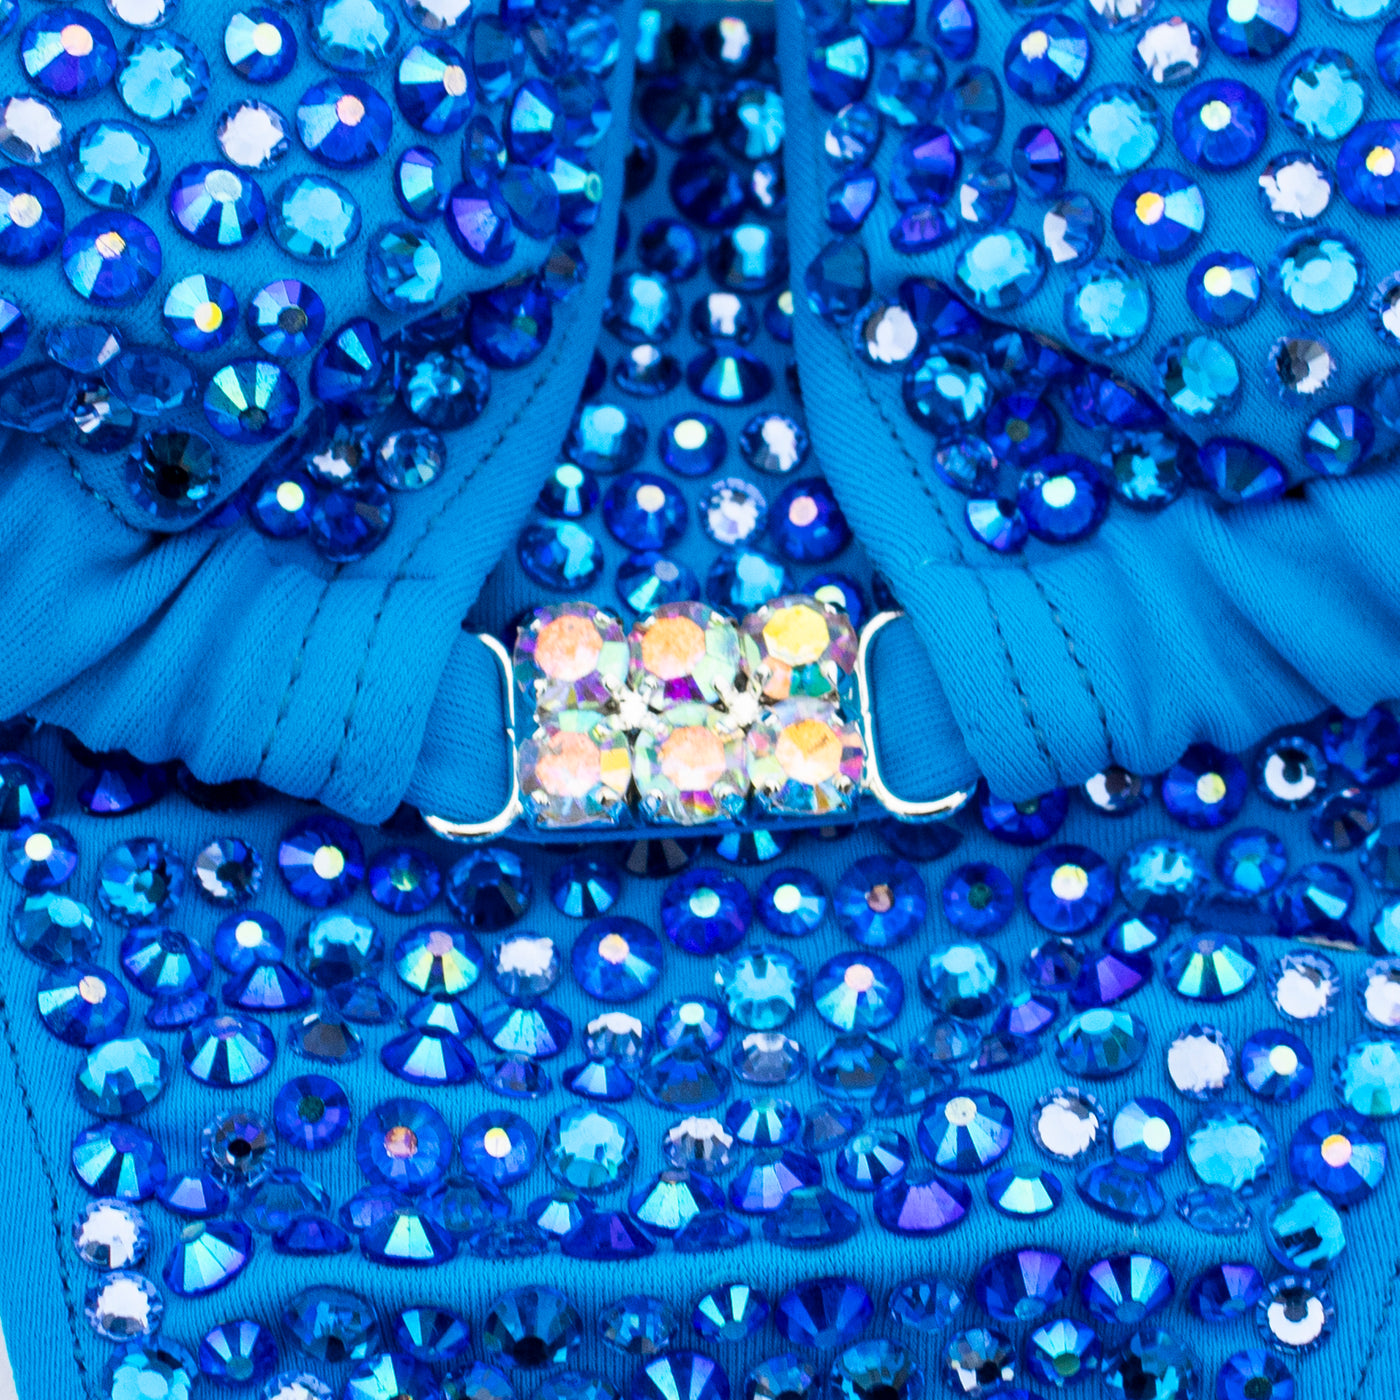 Turquoise Tricot Competition Bikini S/S | Pre-Made Suits | OMG Bikinis